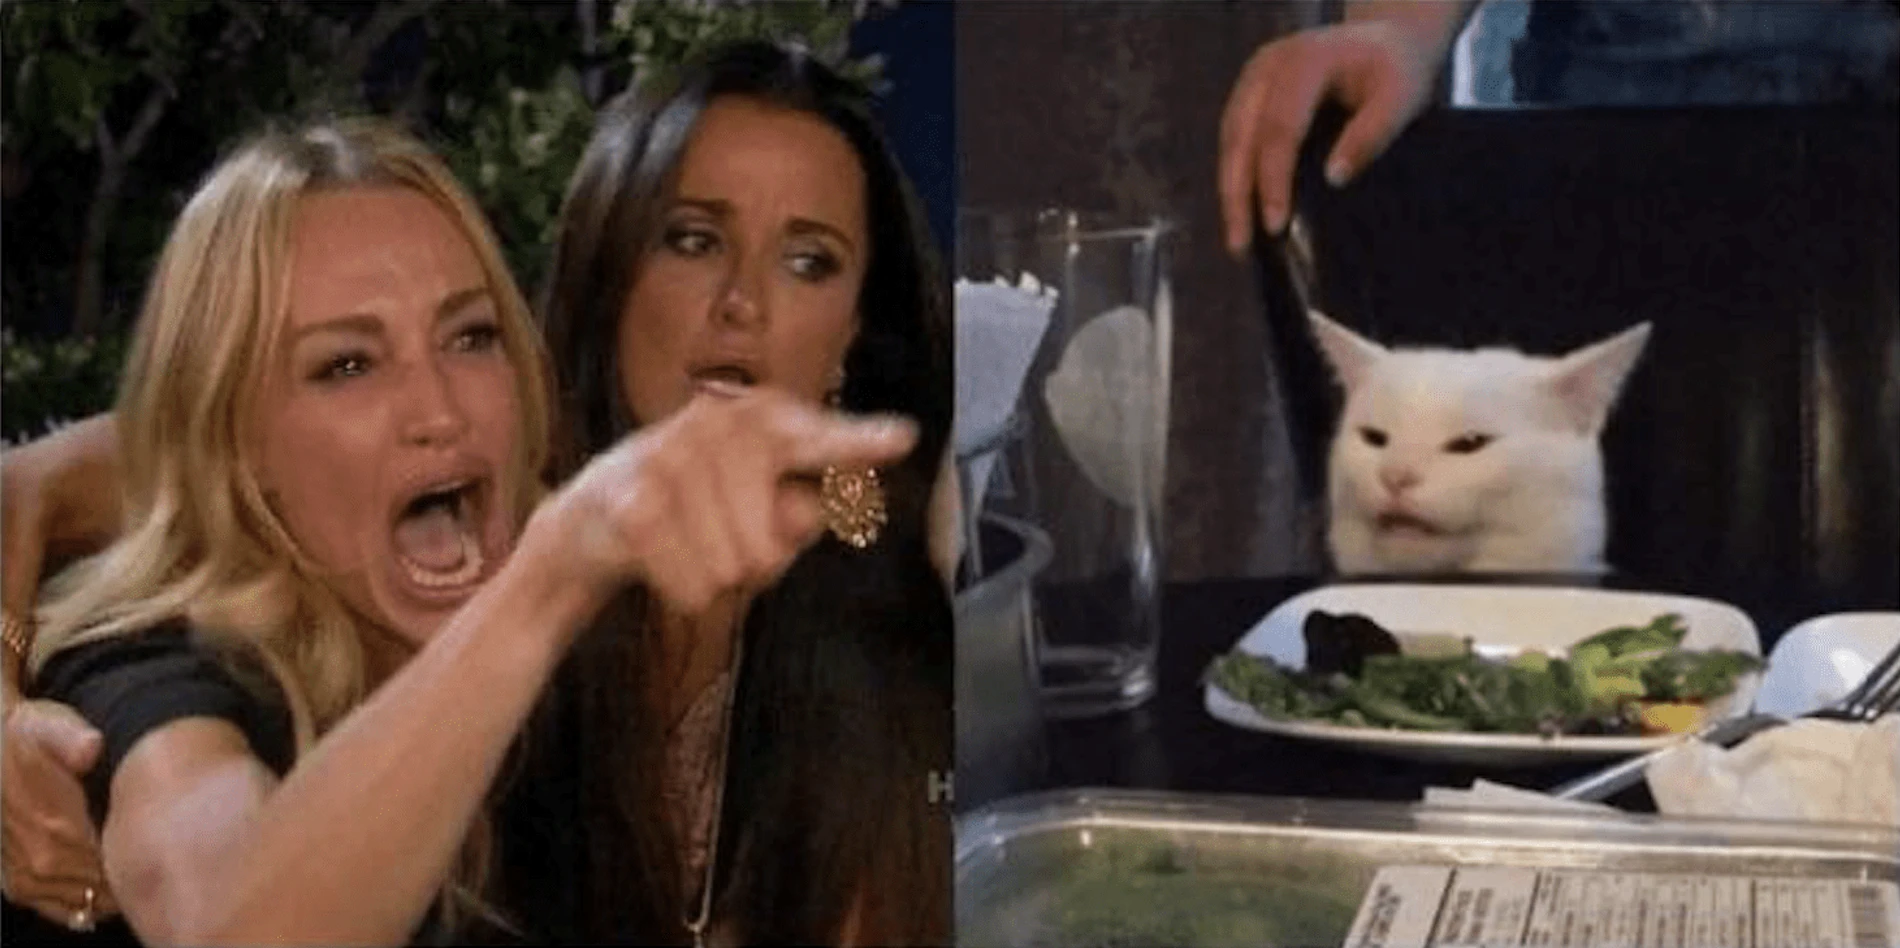 Woman Yelling at a Cat Meme